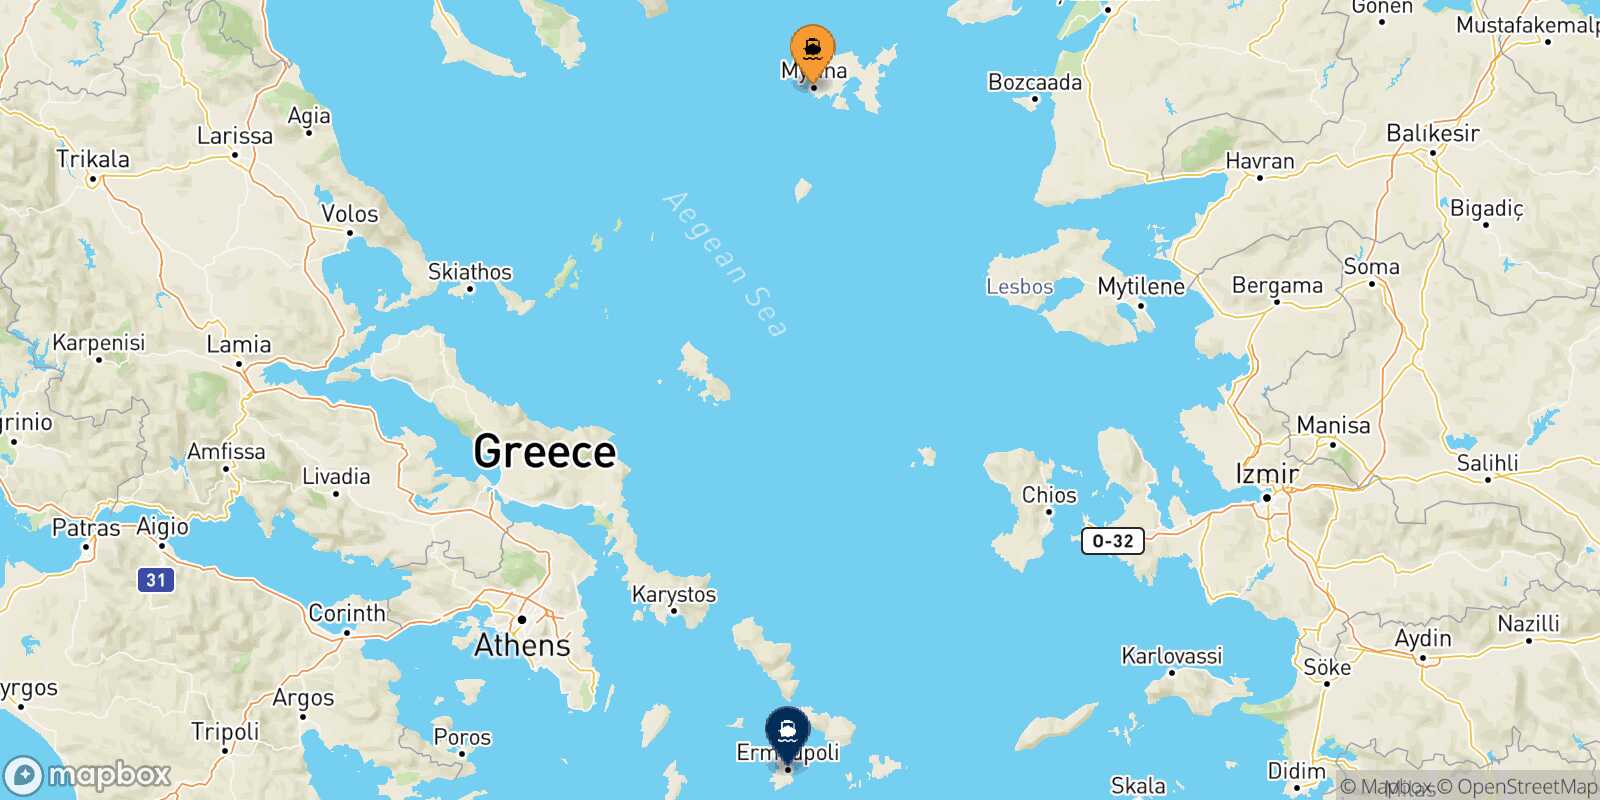 Myrina (Limnos) Syros route map